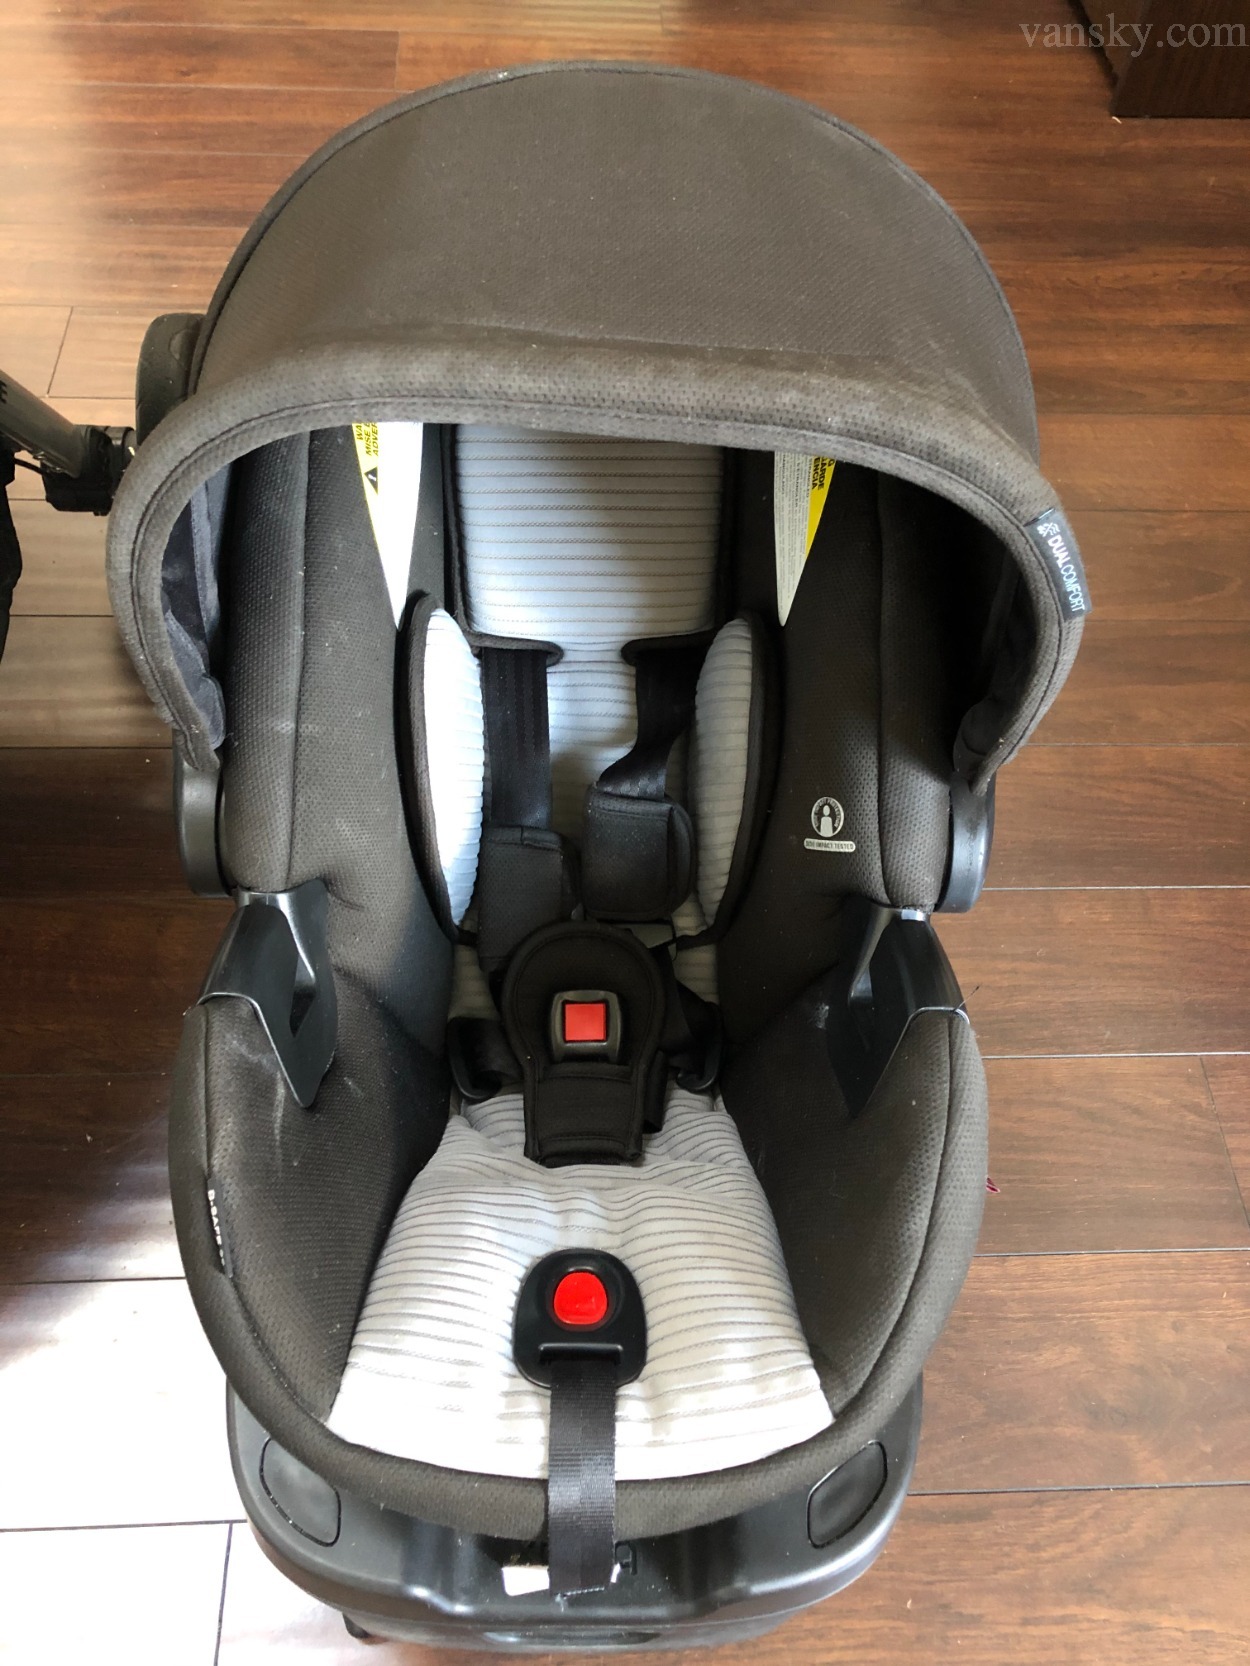 210610232636_infant car seat.jpg